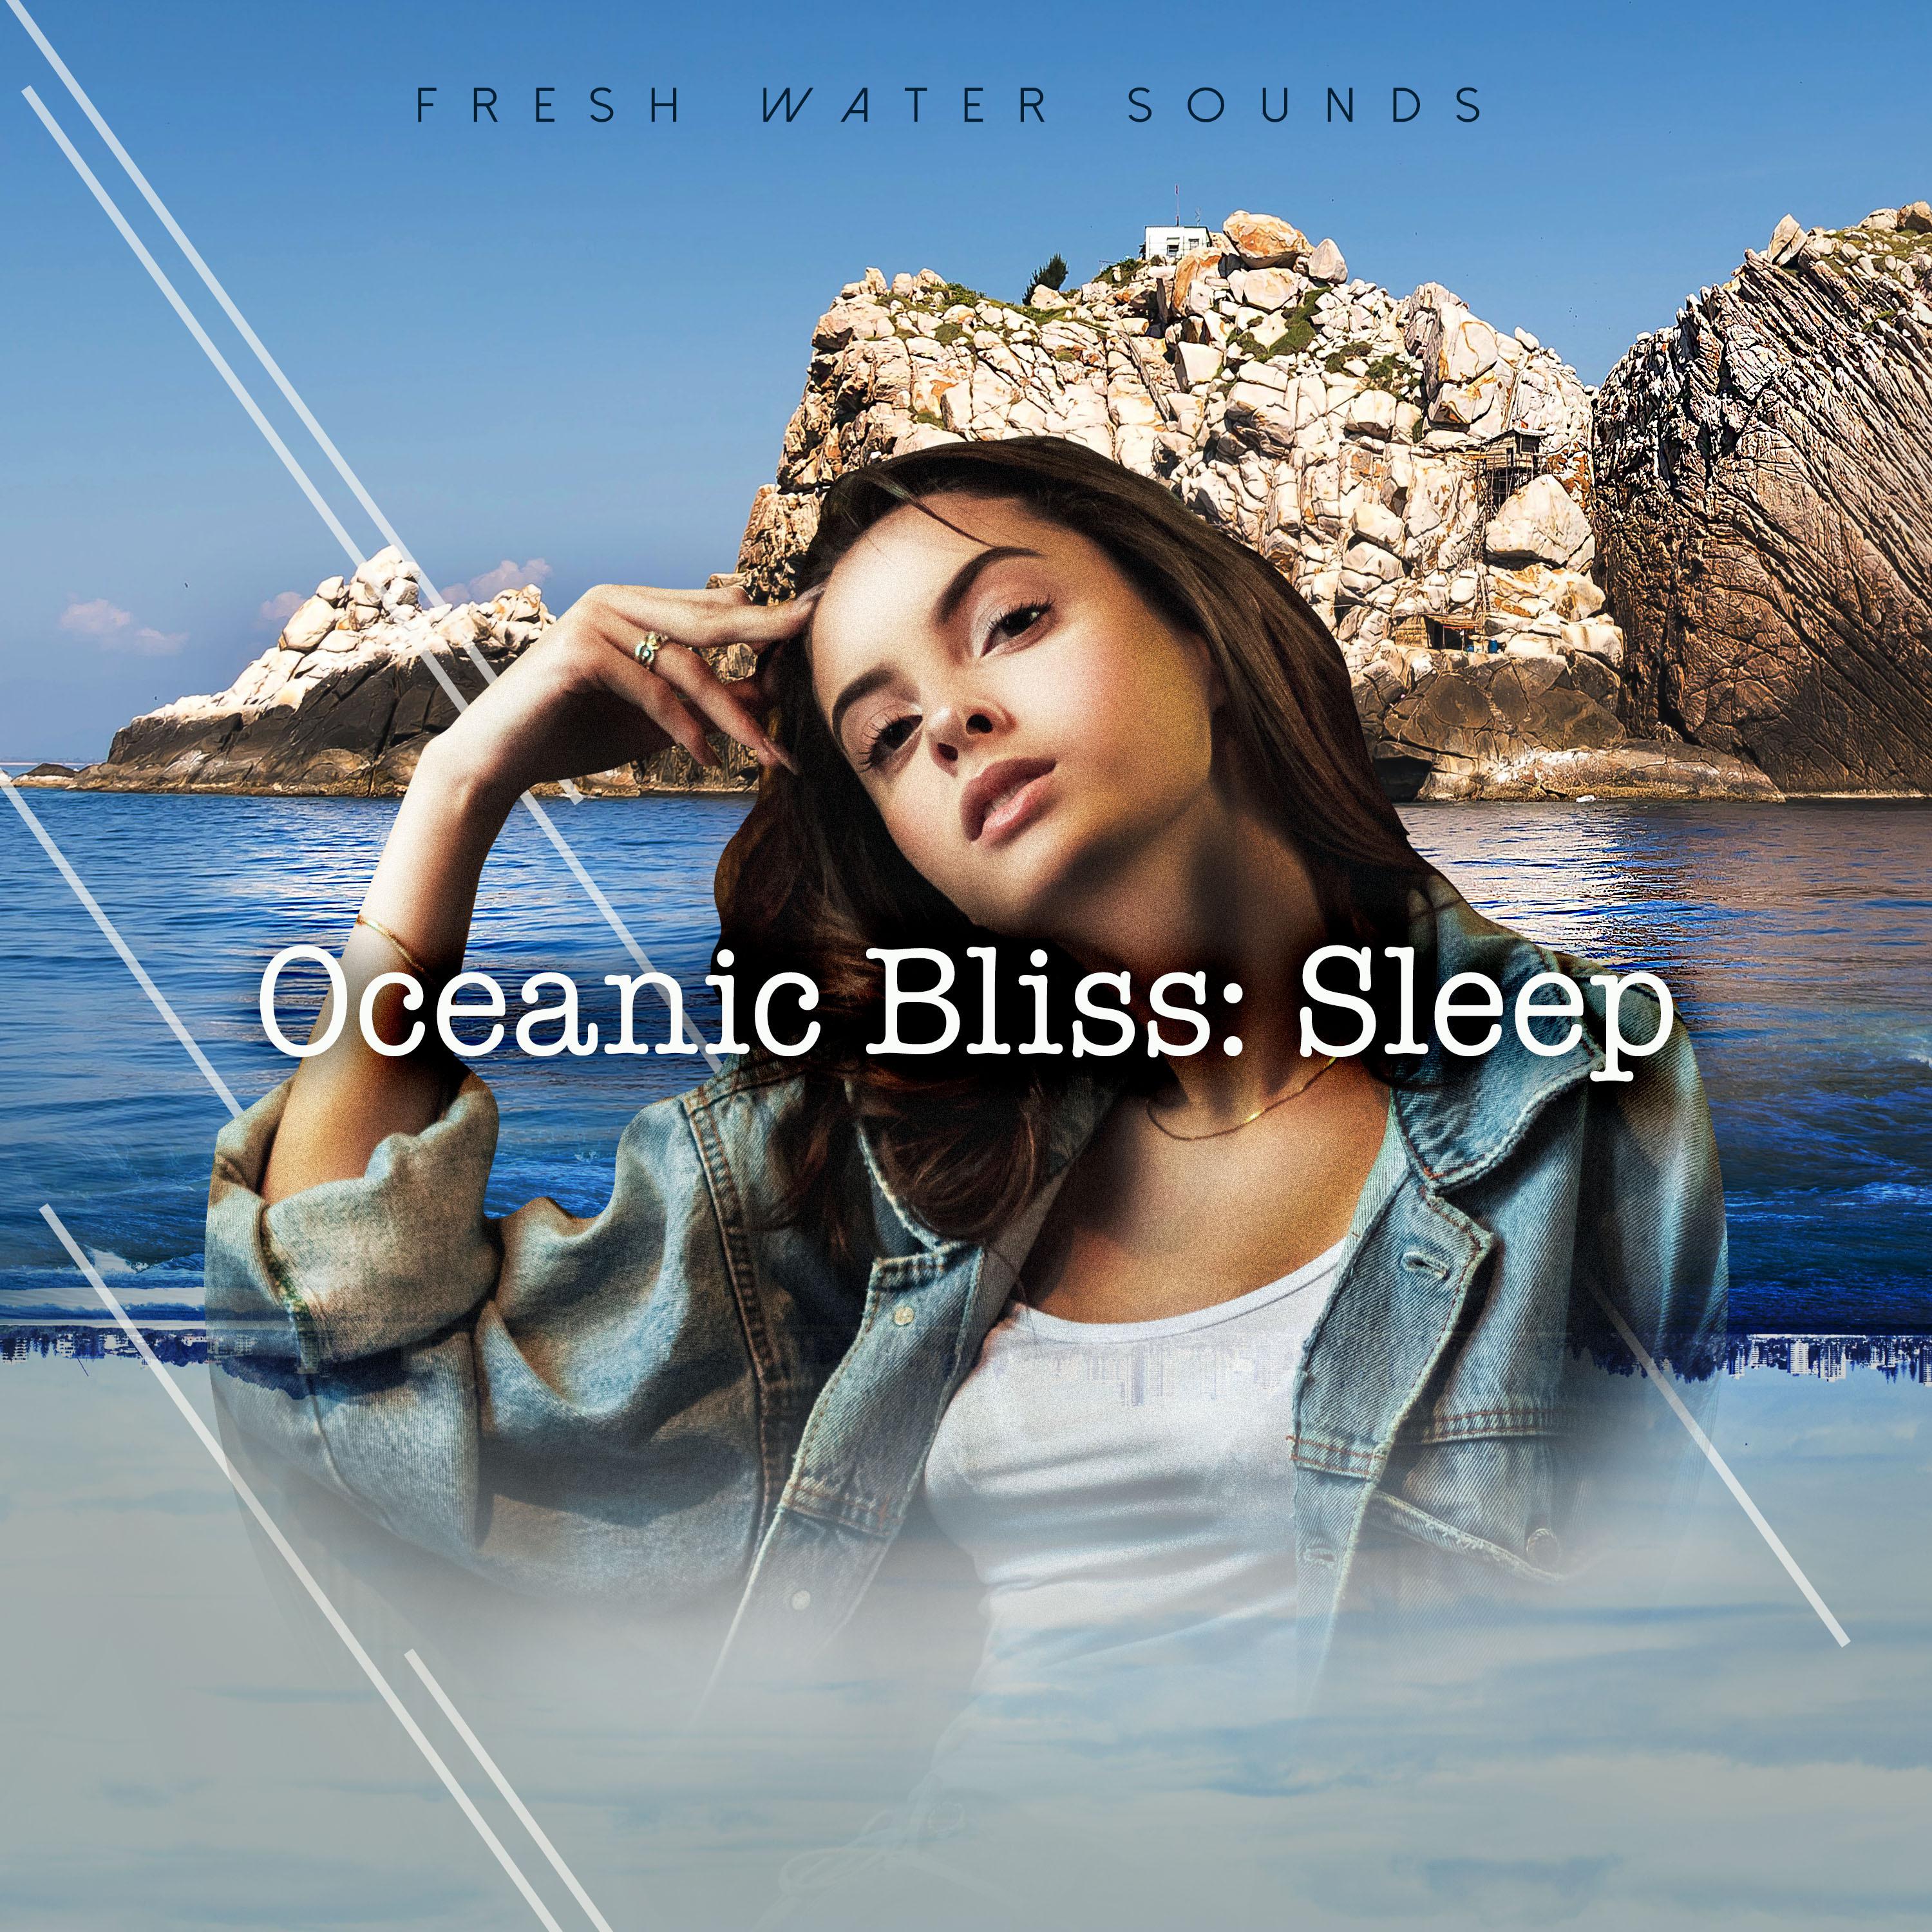 Oceanic Bliss: Sleep